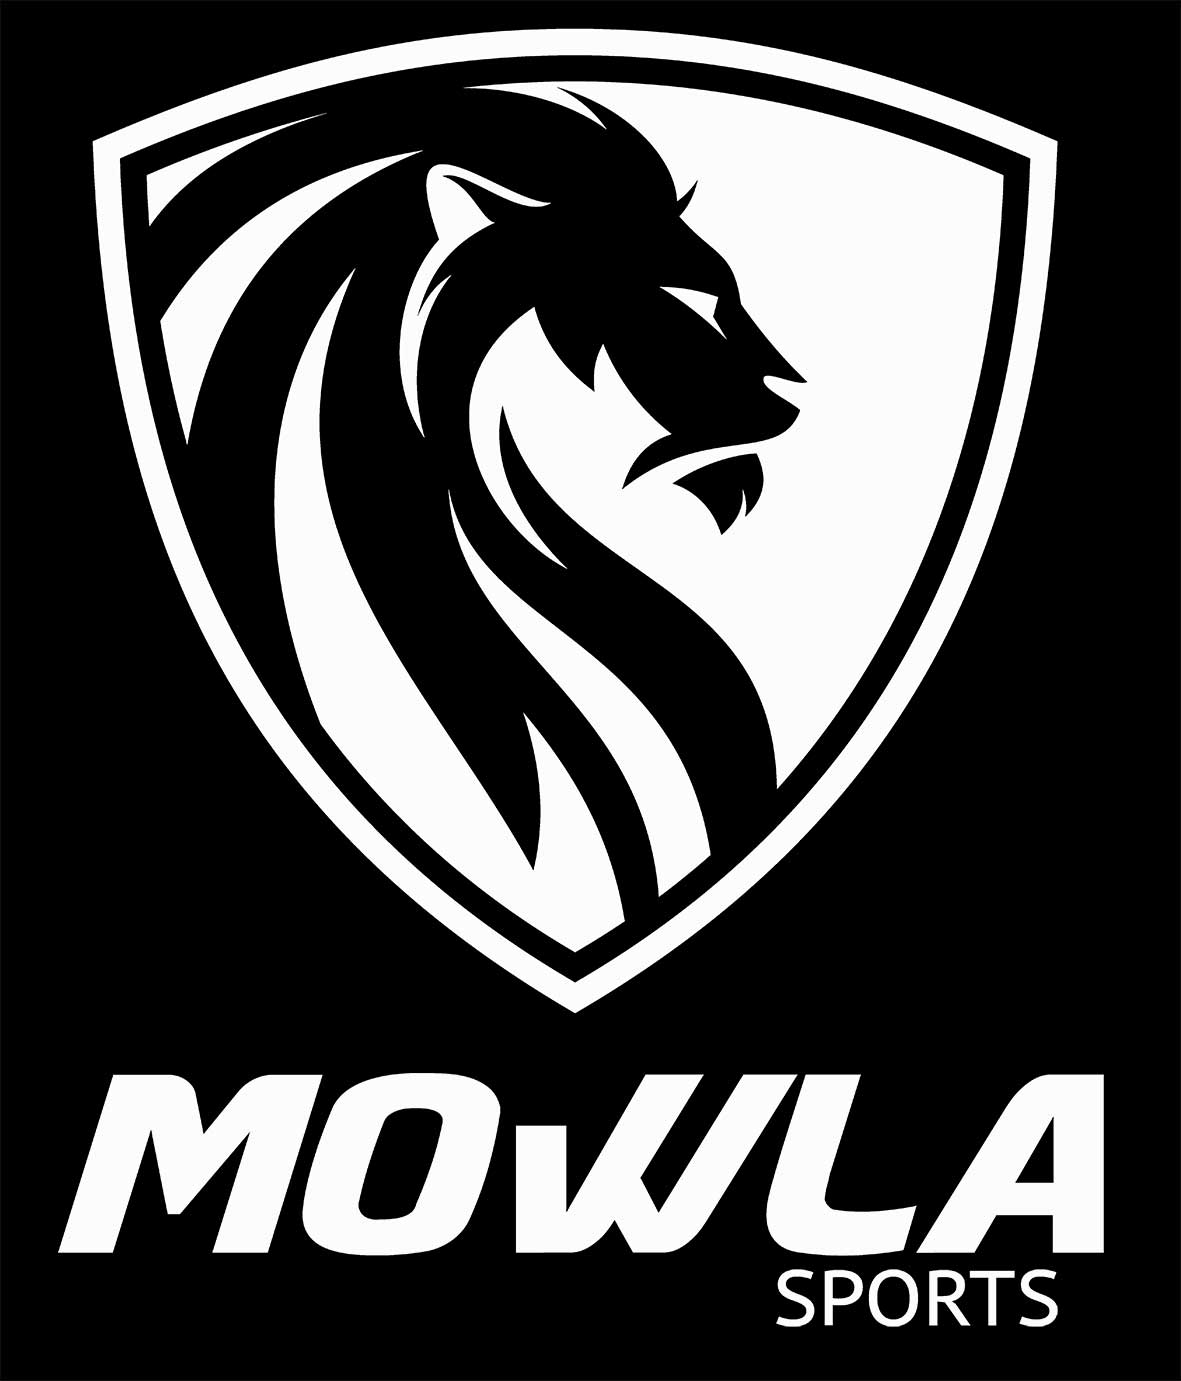 Mowla Sports Logo Original Size White 